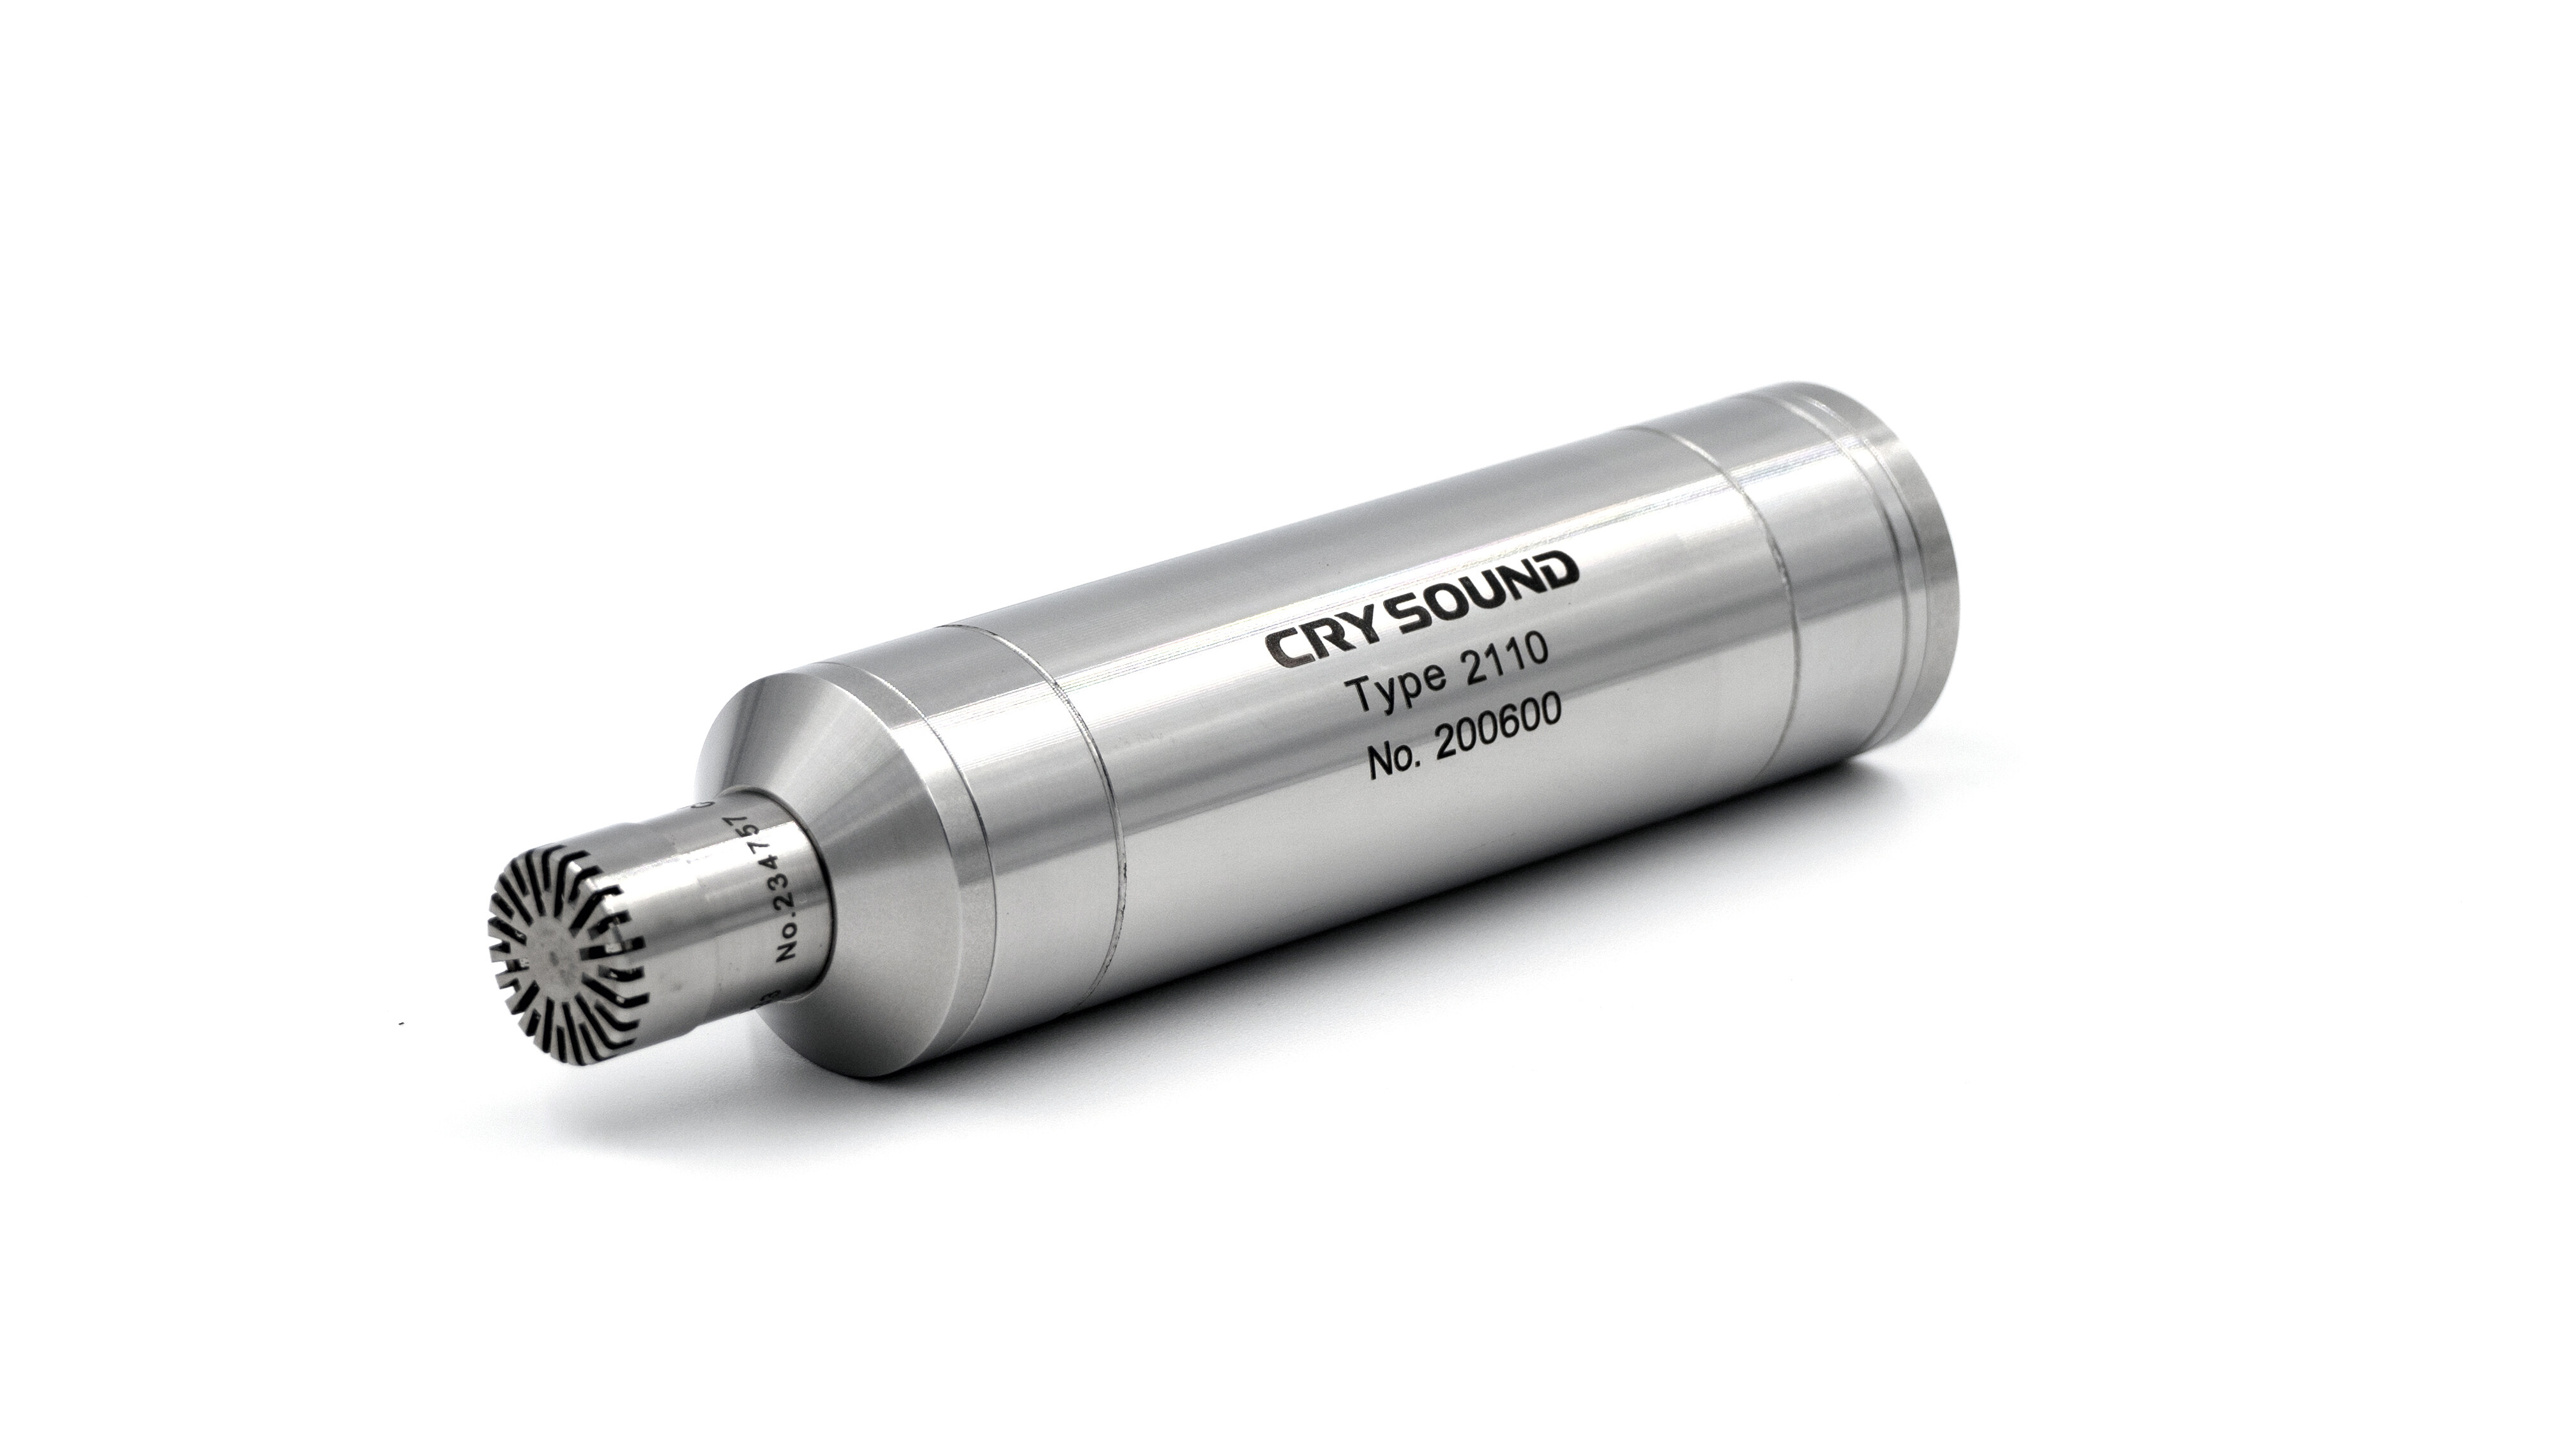 CRY2110噪声传感器产品特性